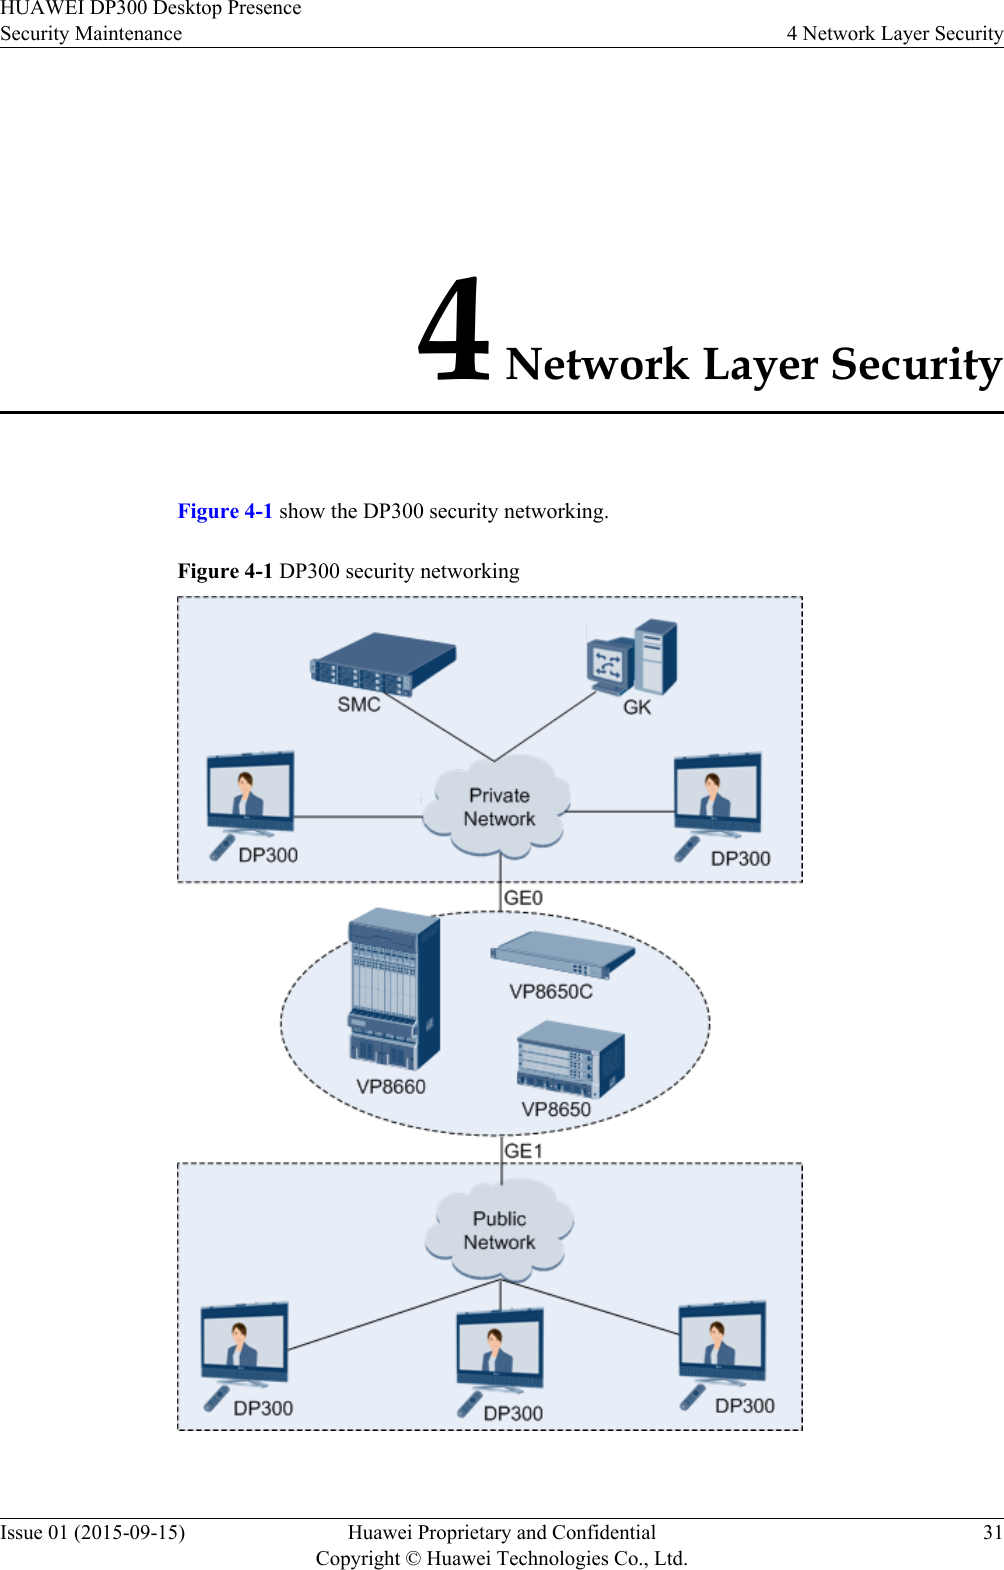 4 Network Layer SecurityFigure 4-1 show the DP300 security networking.Figure 4-1 DP300 security networkingHUAWEI DP300 Desktop PresenceSecurity Maintenance 4 Network Layer SecurityIssue 01 (2015-09-15) Huawei Proprietary and ConfidentialCopyright © Huawei Technologies Co., Ltd.31